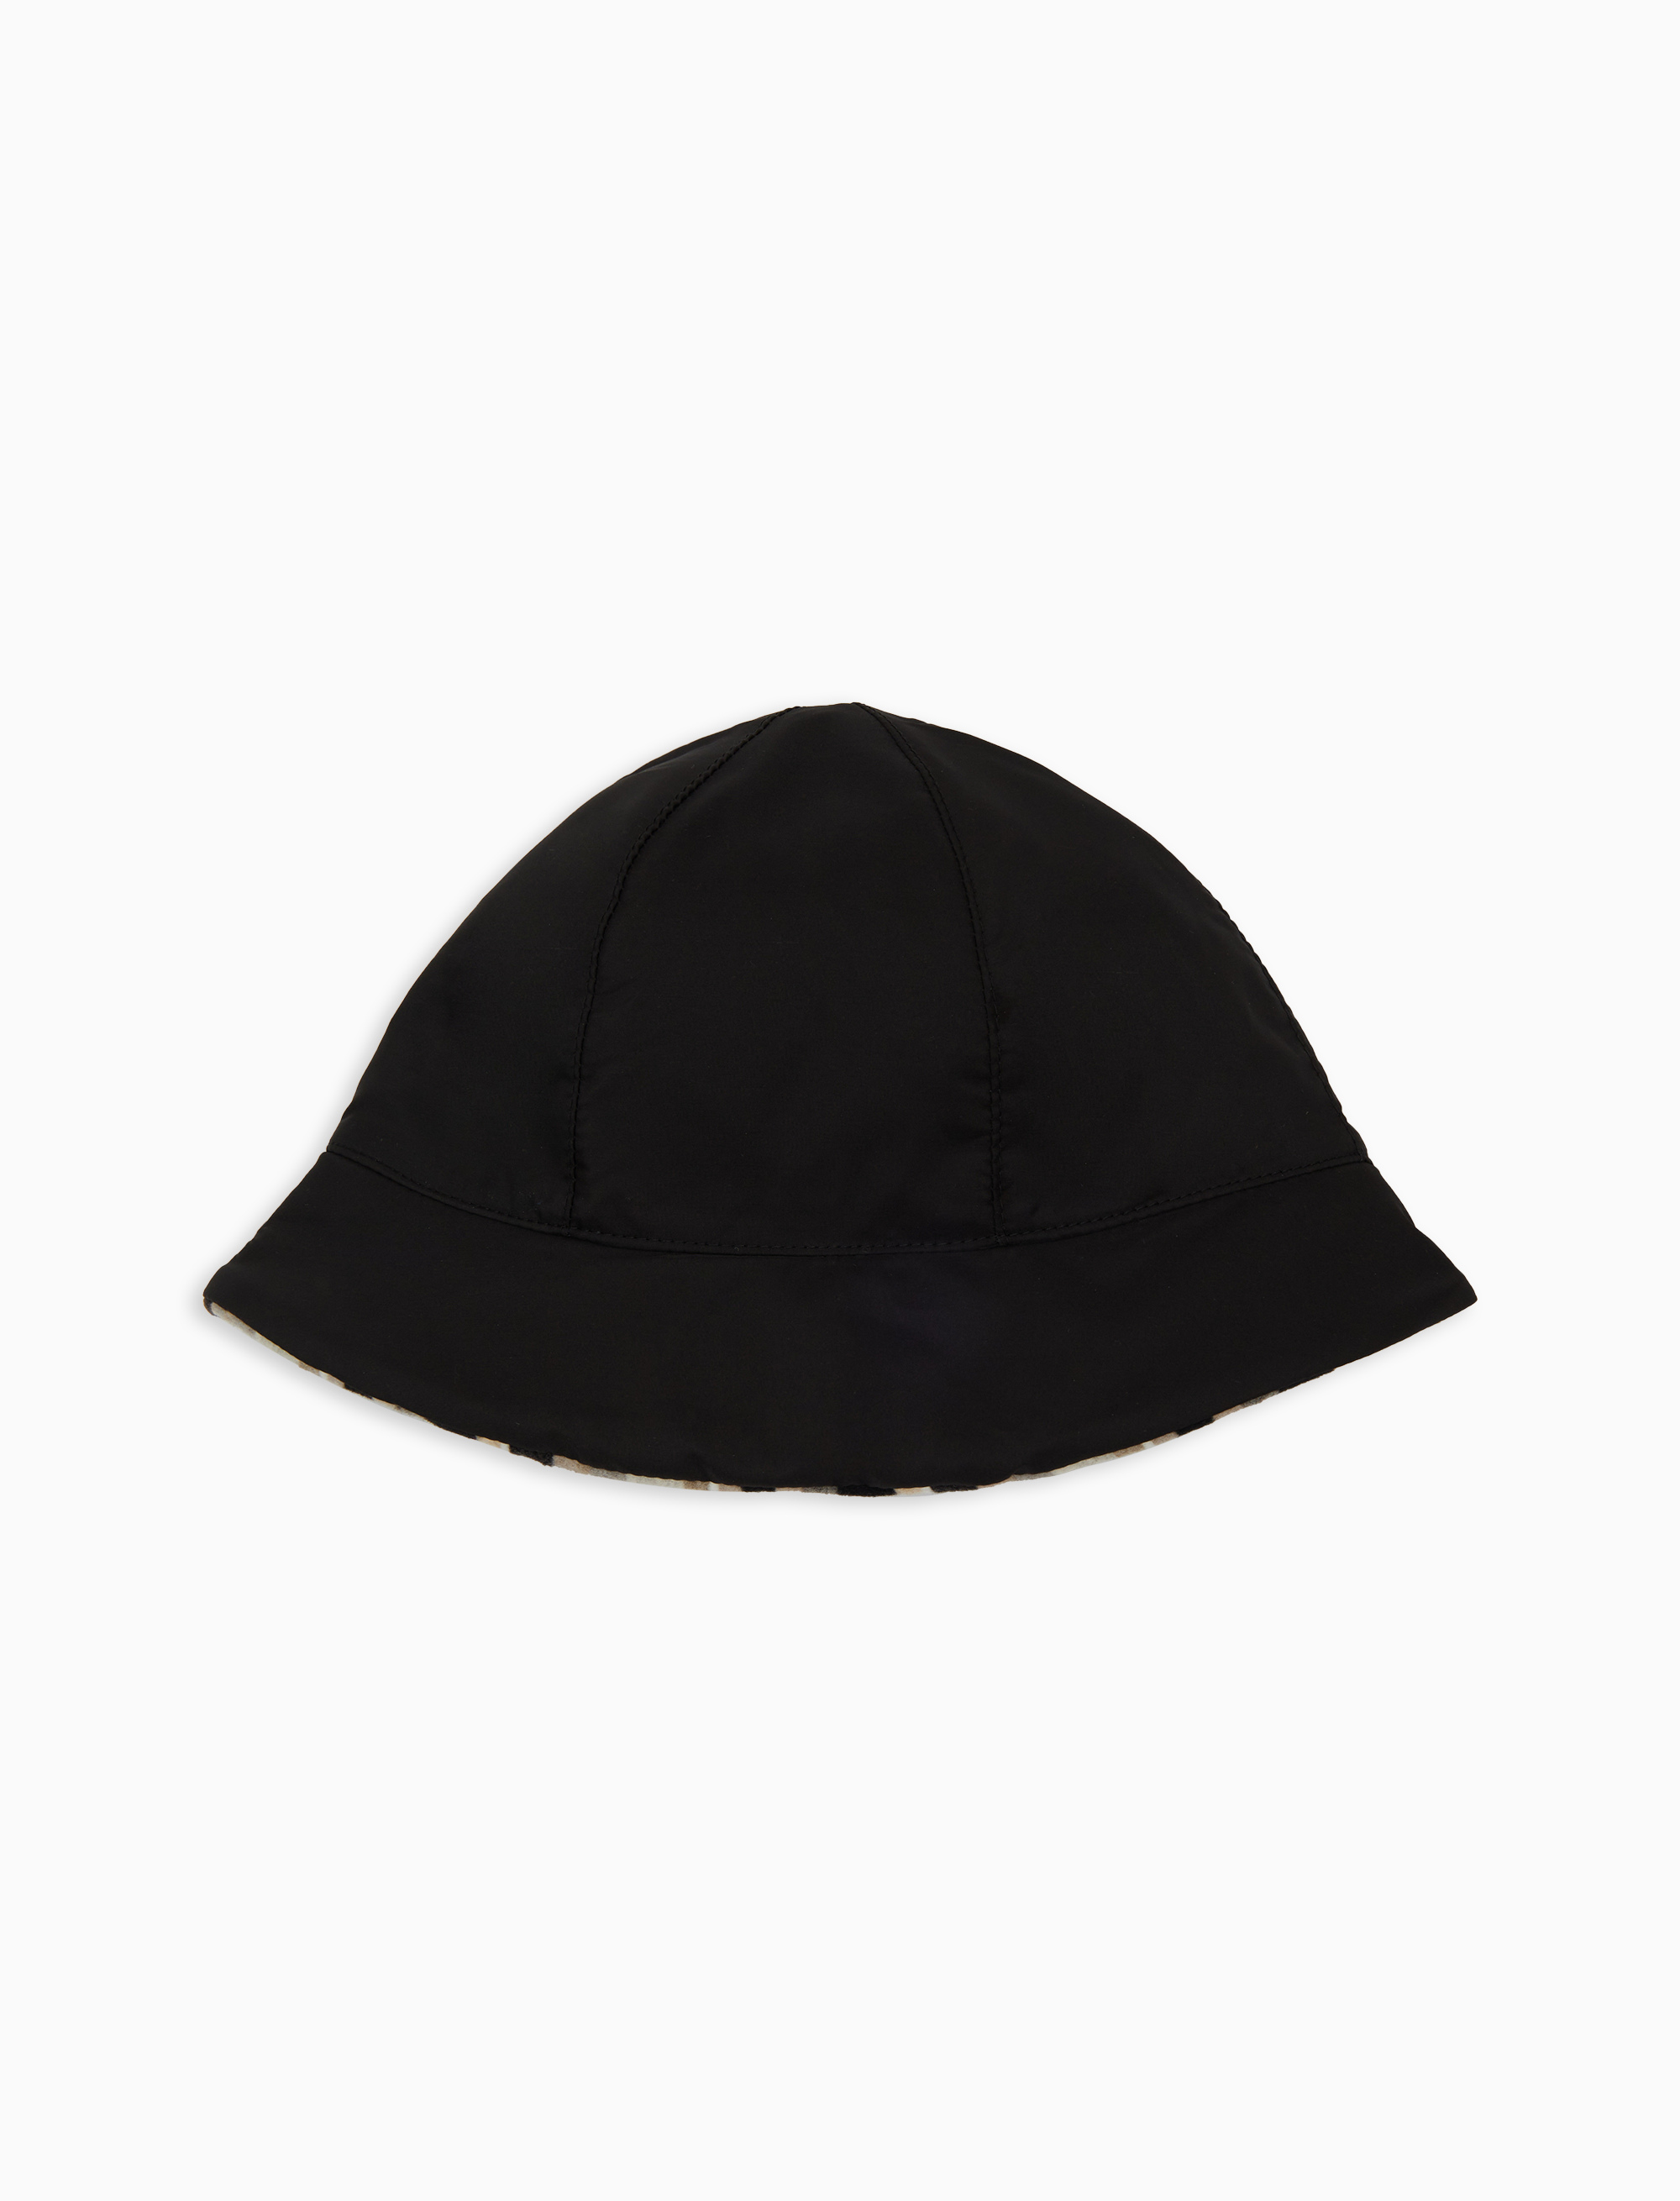 Men's plain black rain hat | Gallo